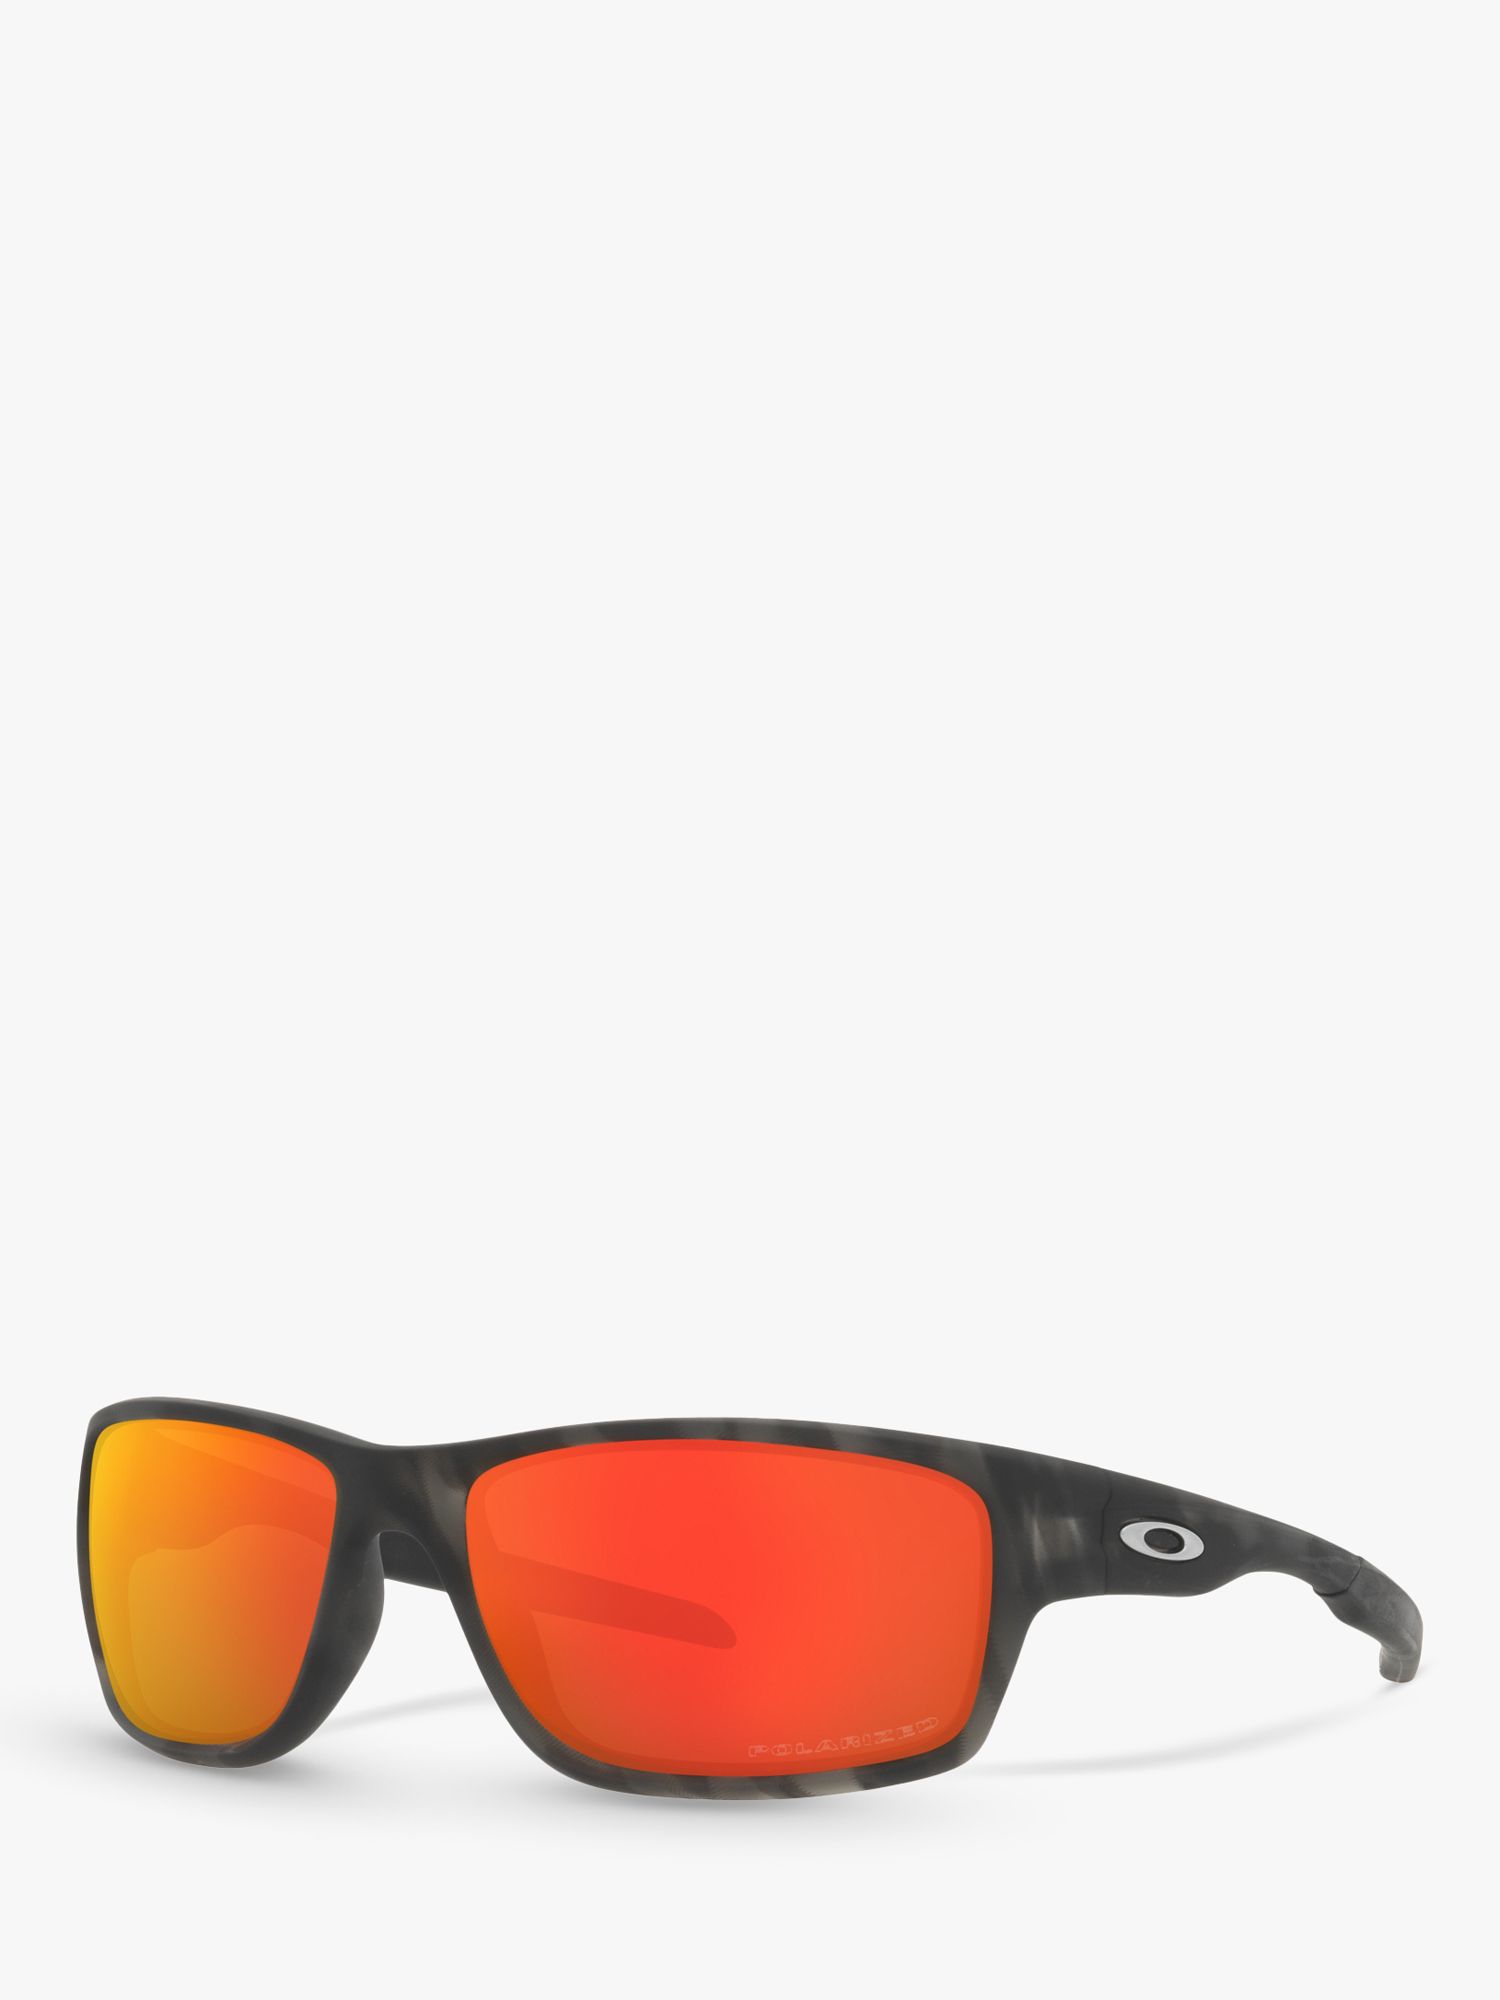 Oakley OO9225 Men's Canteen Prizm Rectangular Polarised Sunglasses, Matte Black Tortoise/Mirror Red